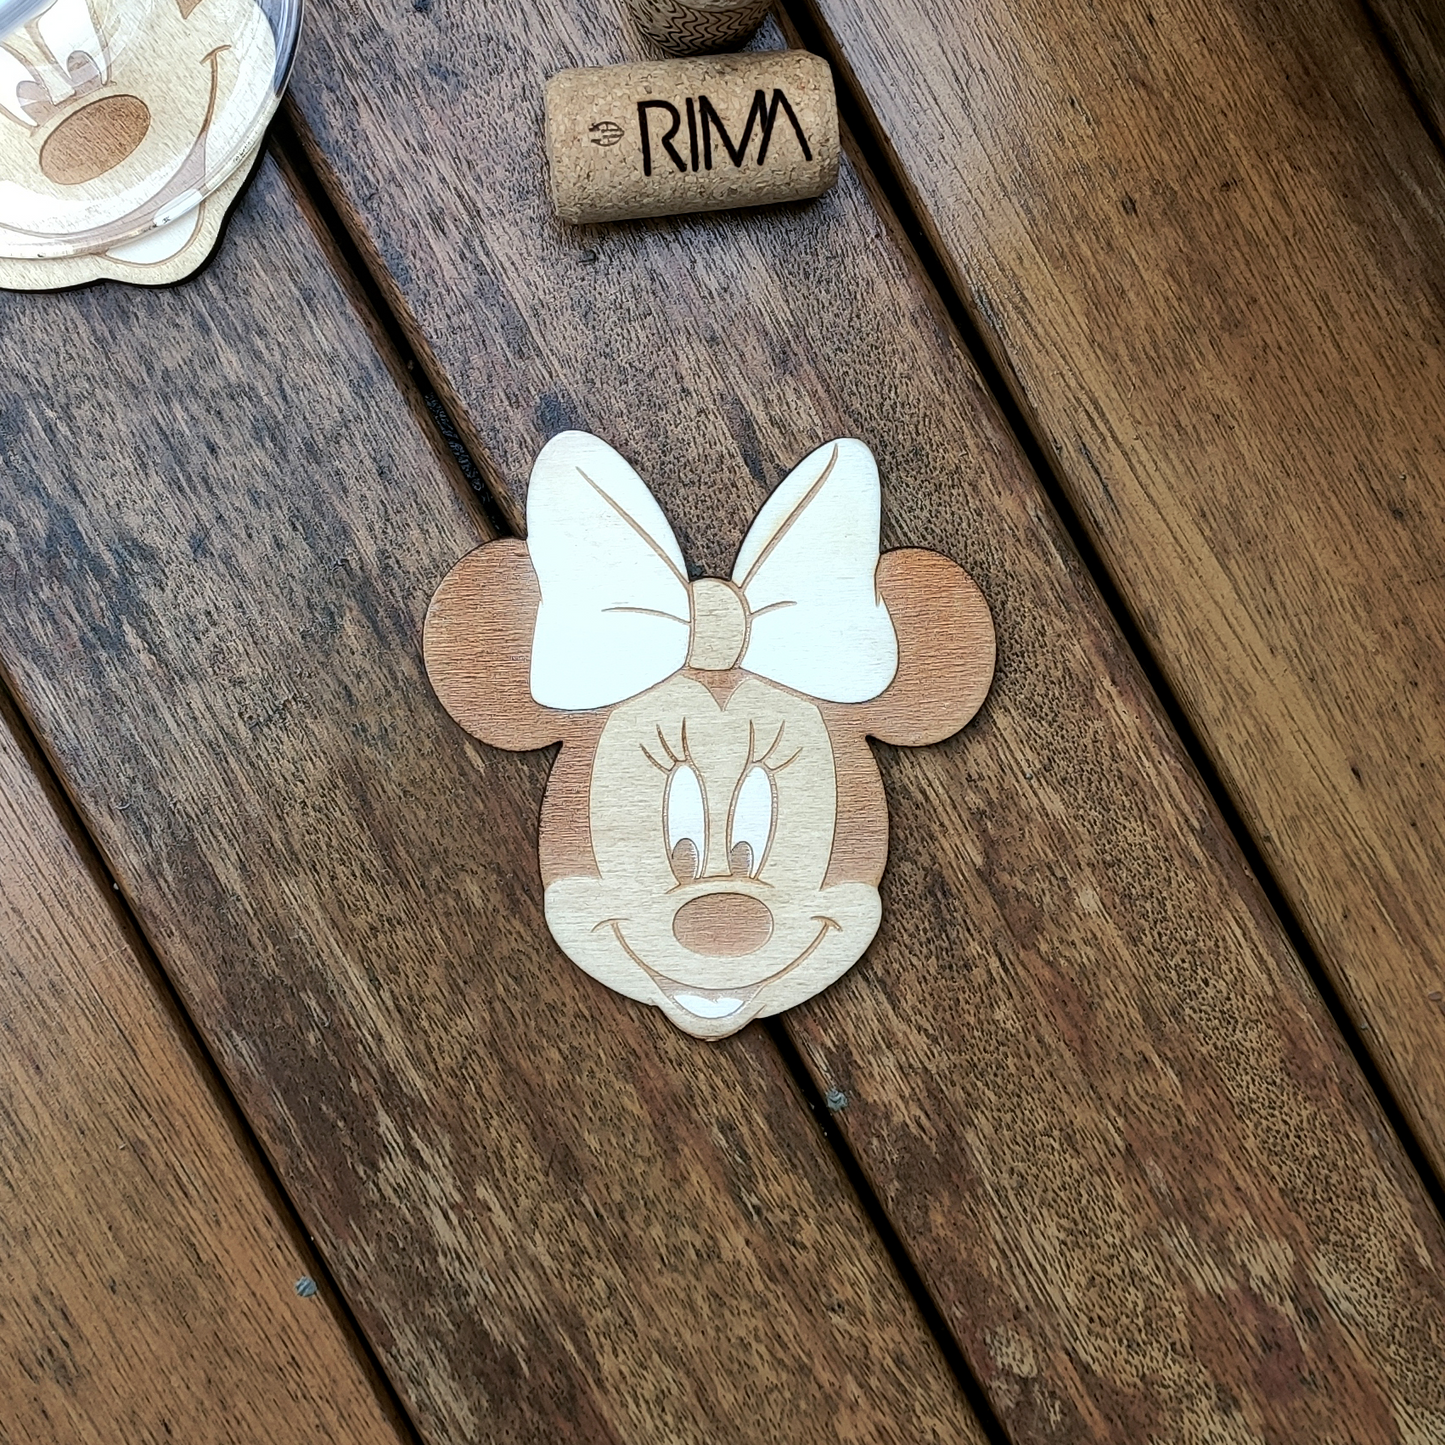 Set of 2 Mickey and Minnie Wood Coasters - Housewarming Gift - Disney